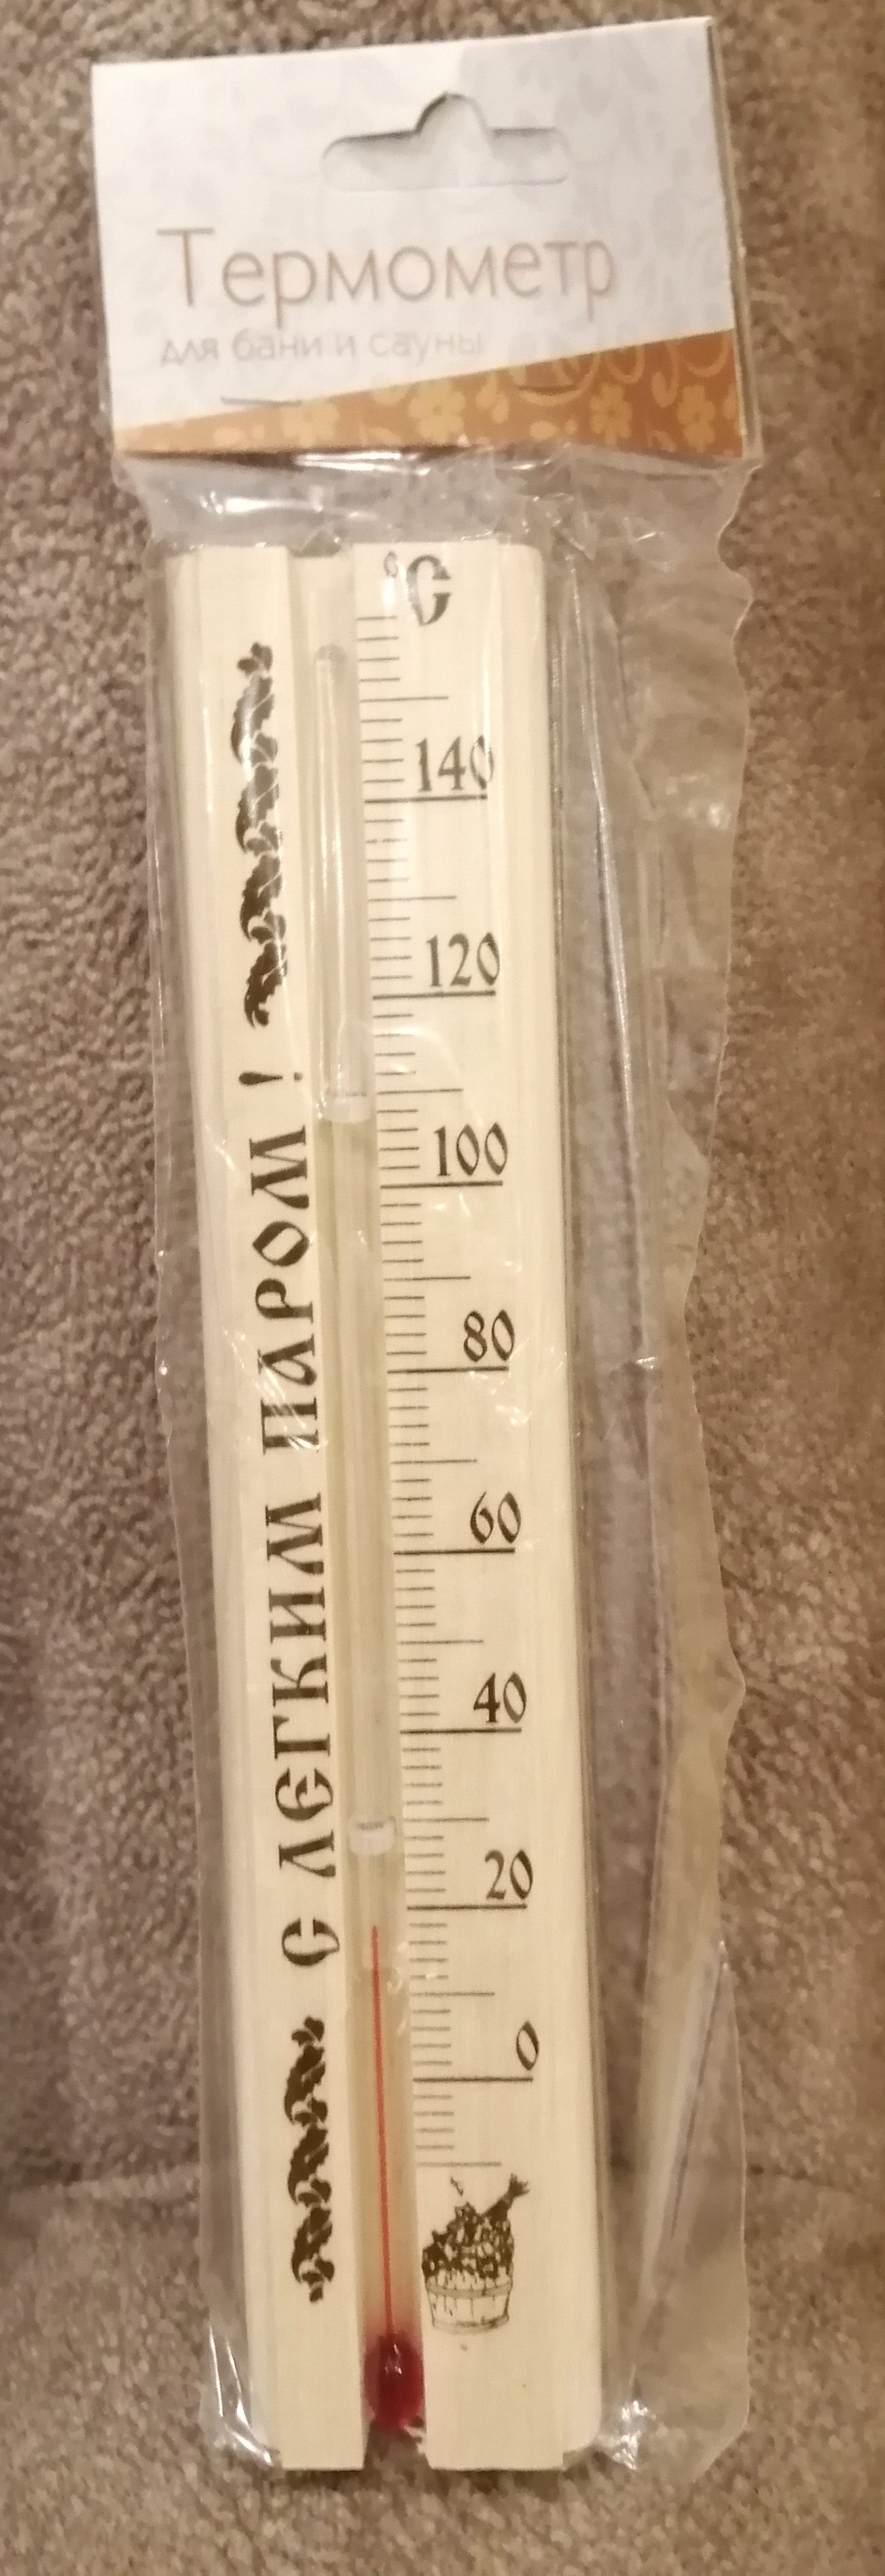 Фотография покупателя товара Термометр для бани и сауны ТБС-41 (t 0 + 140 С) в пакете - Фото 1